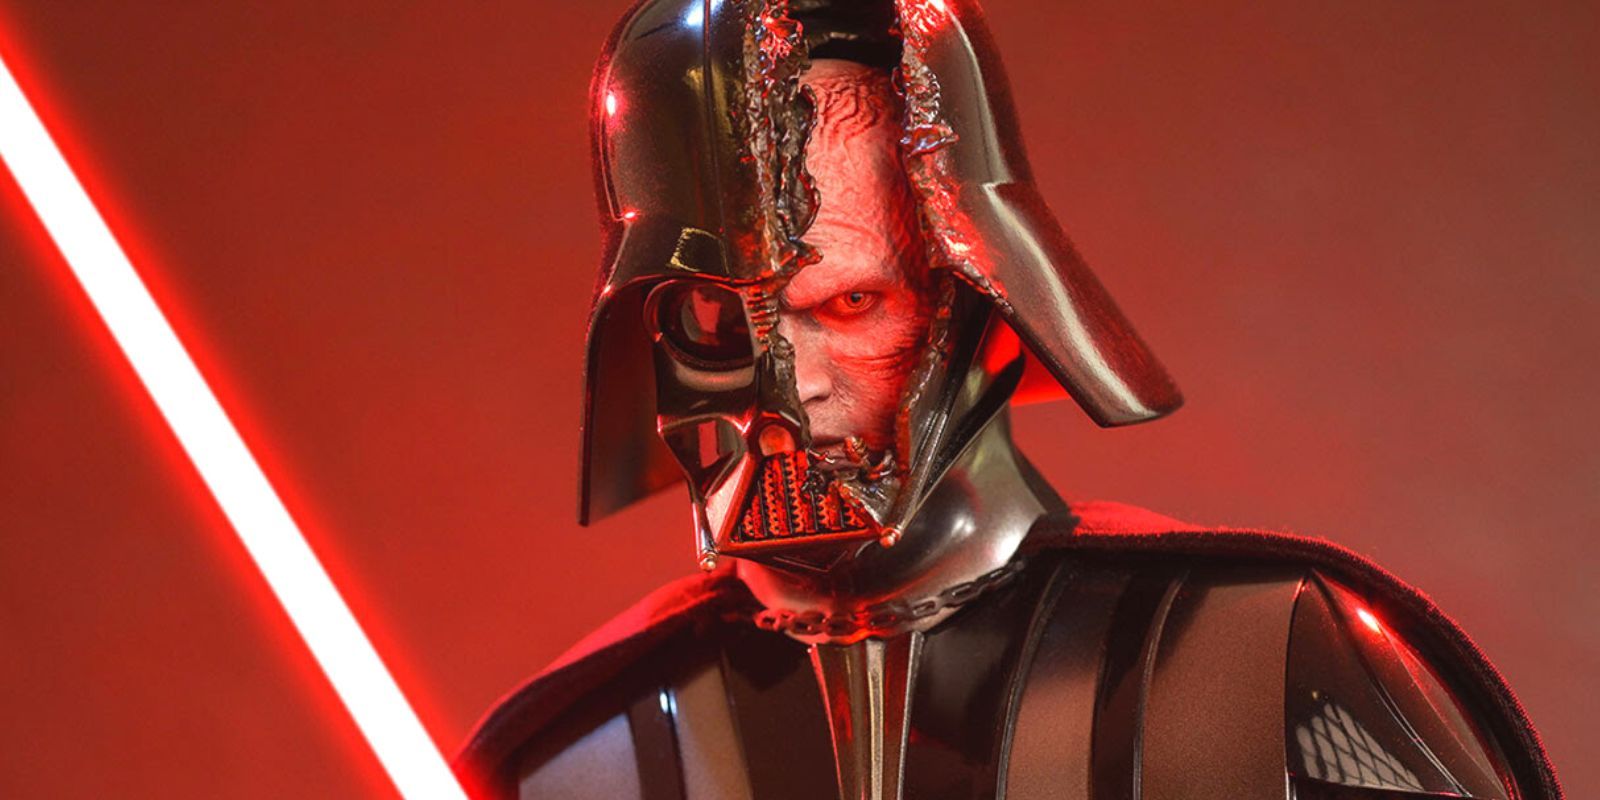 Darth Vader Hot Toys Battle-Damaged Obi-Wan Kenobi